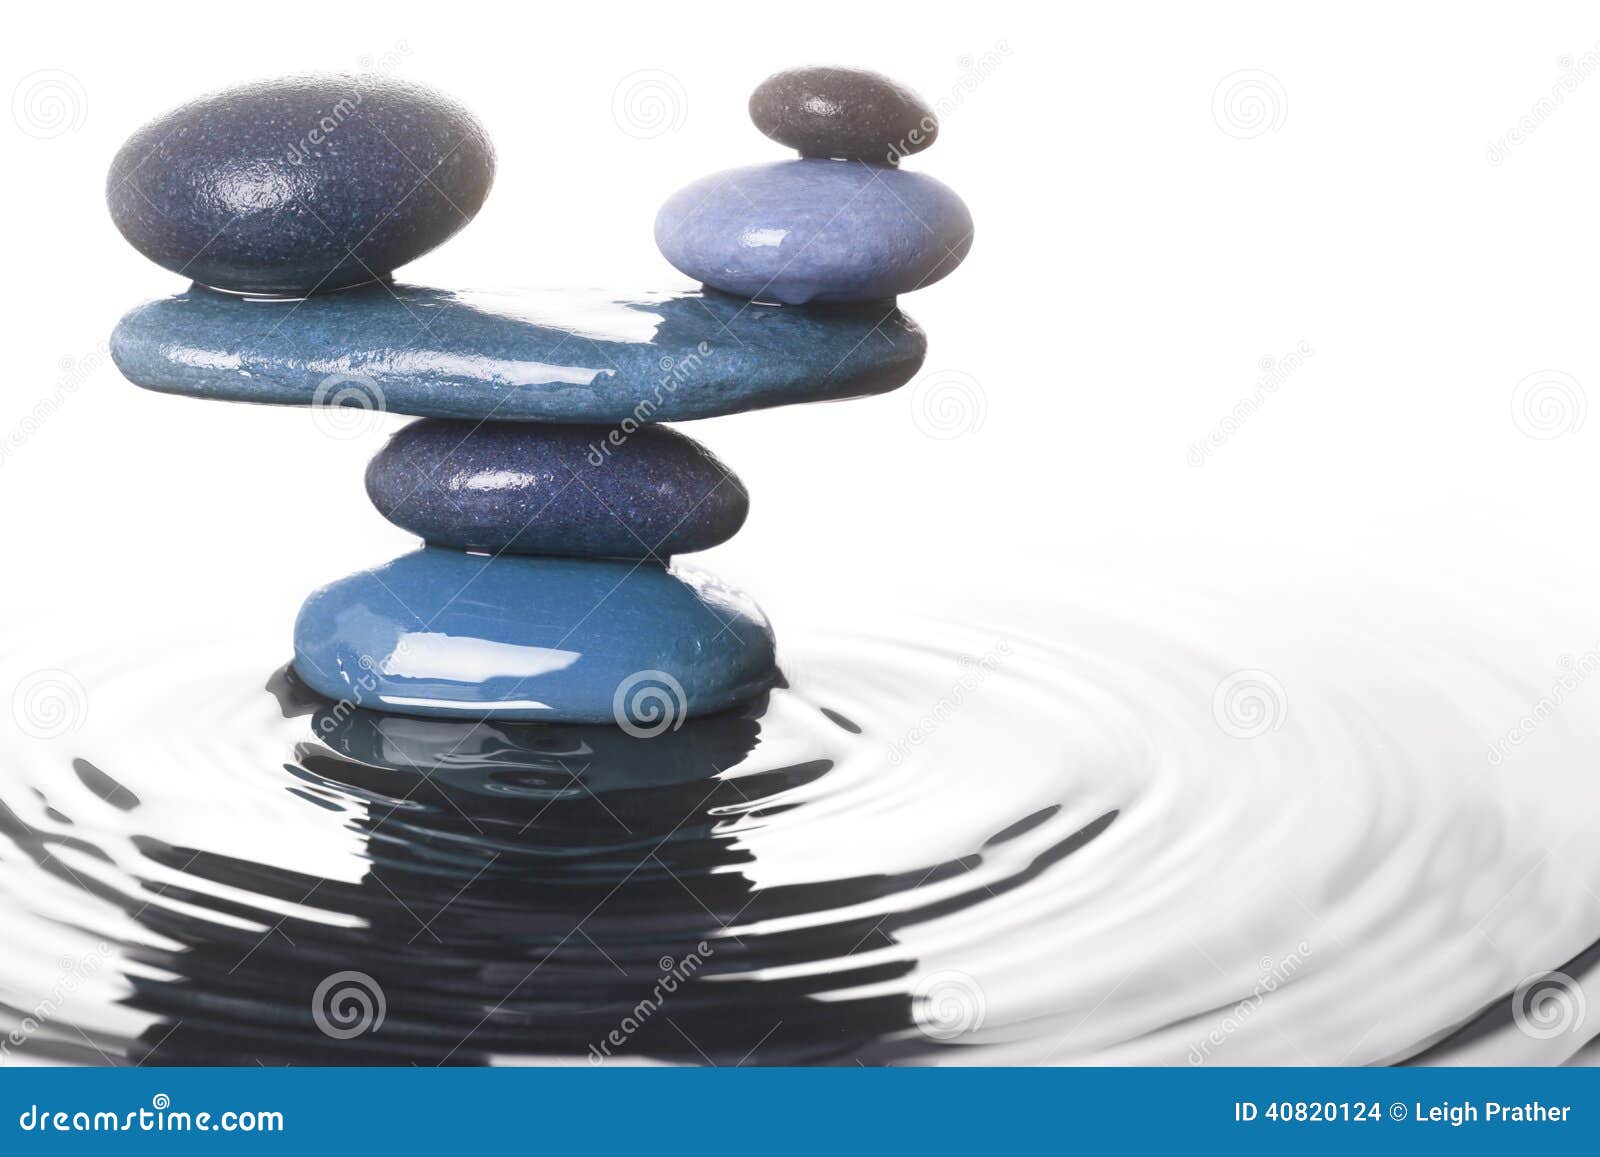 balanced stones in water